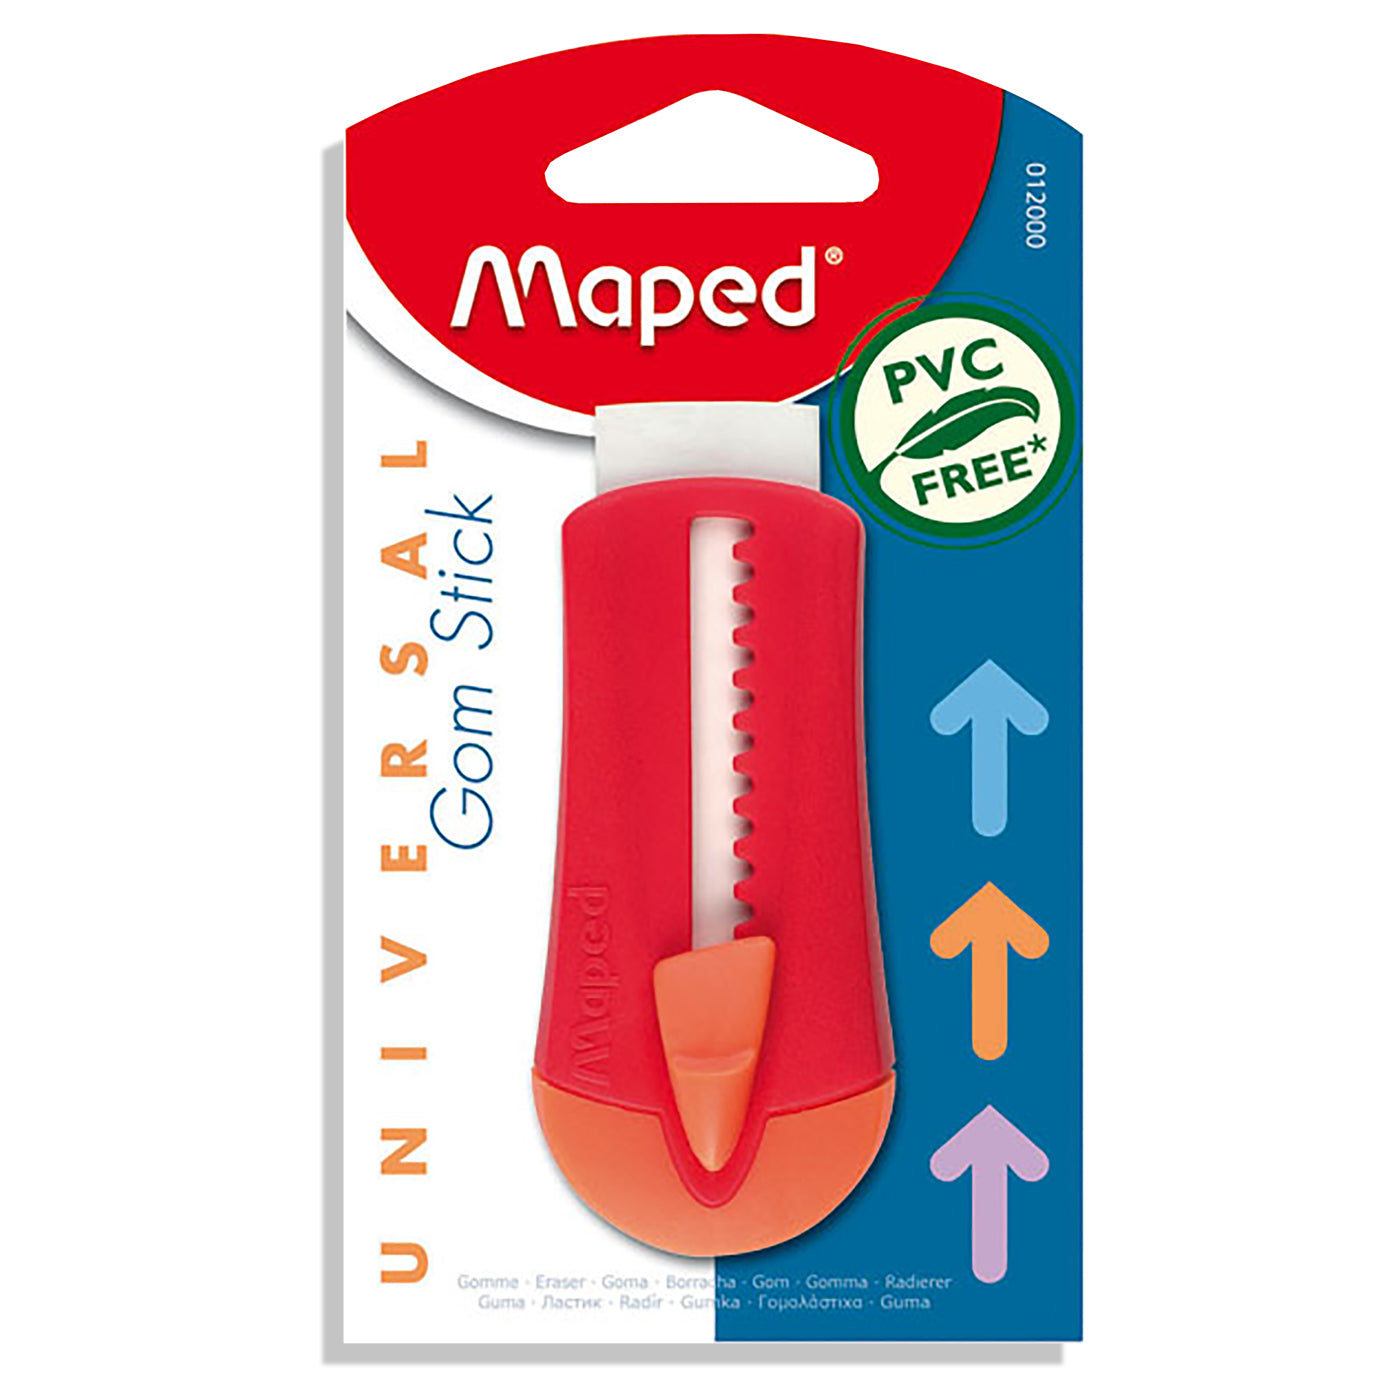 Maped Gom Stick Universal Eraser Holder